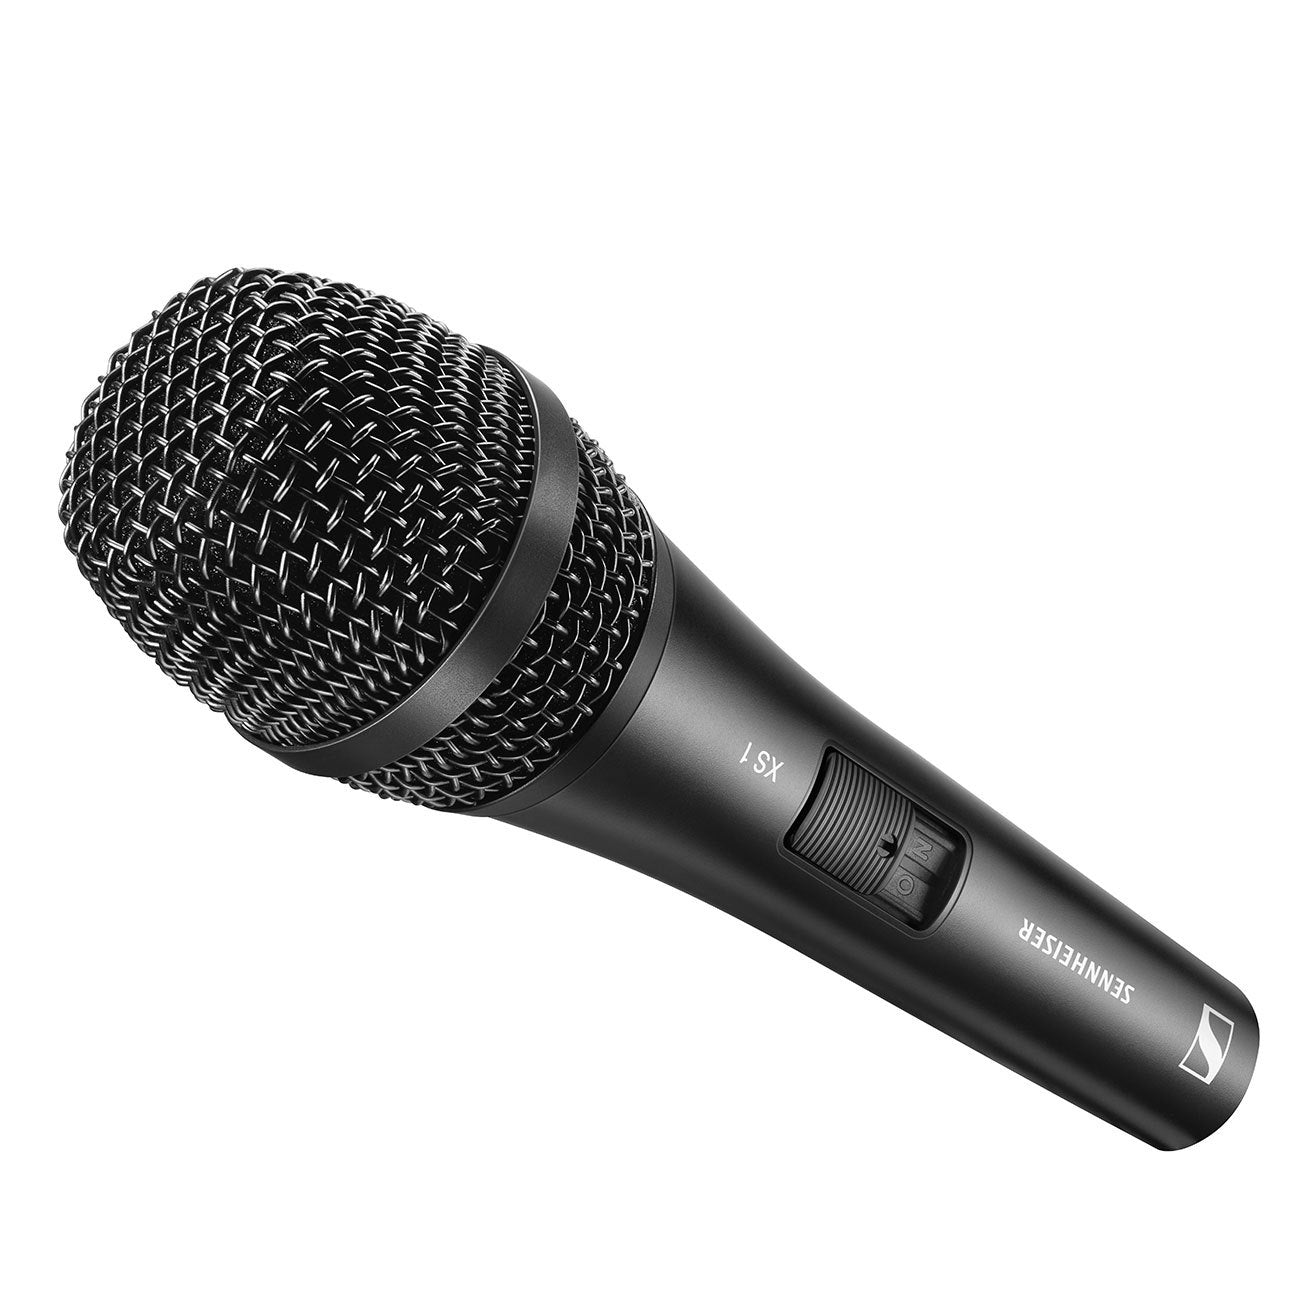 Sennheiser XS 1 - Vocal microphone